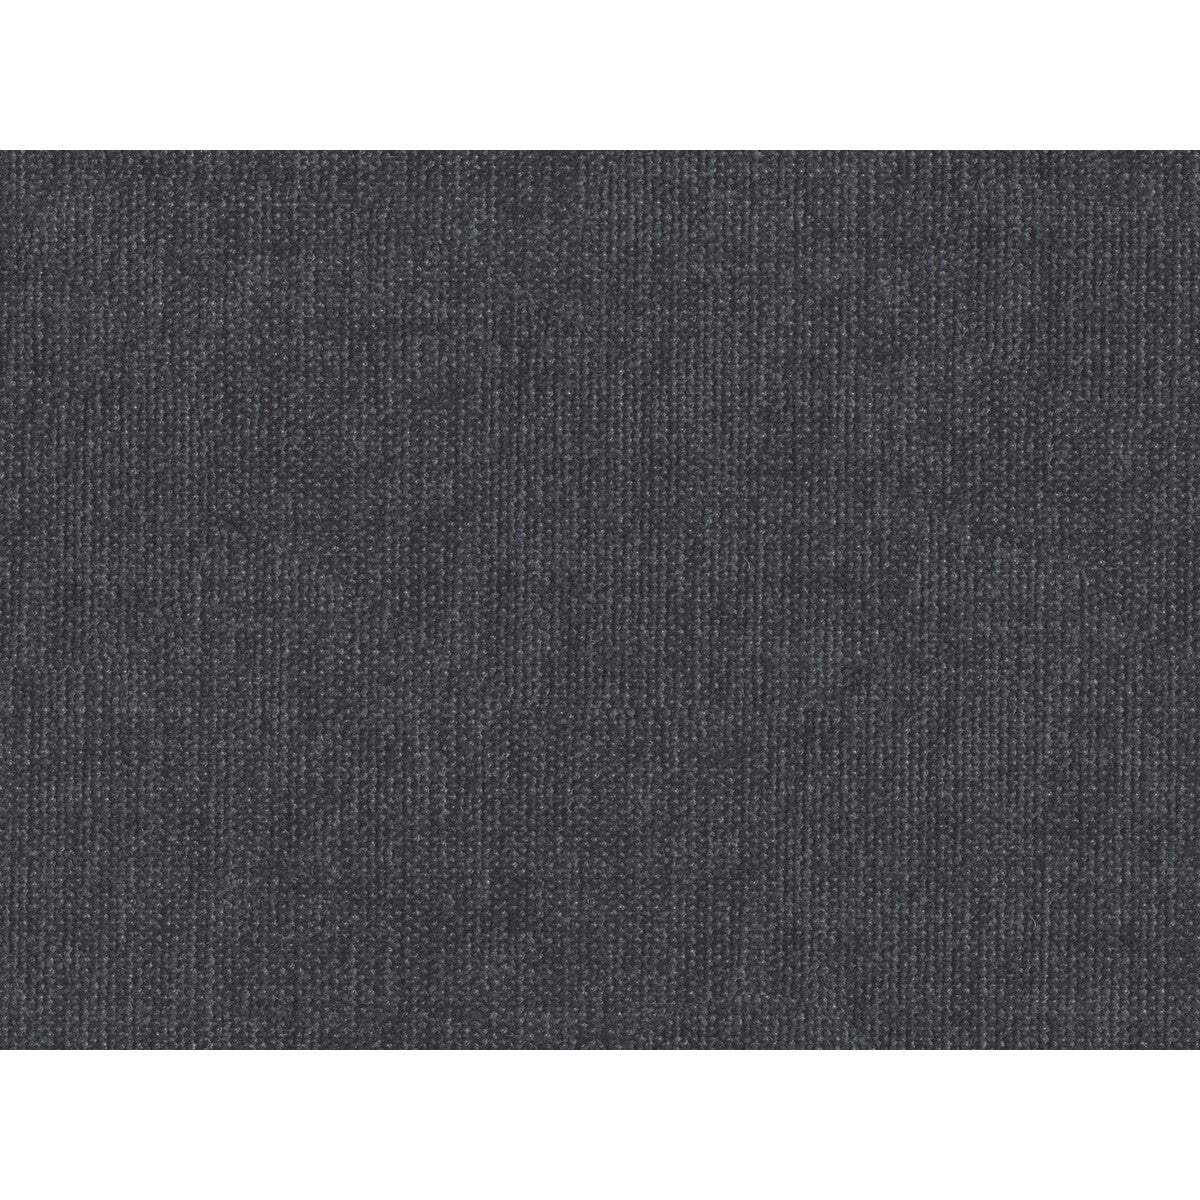 Kravet Smart fabric in 34959-85 color - pattern 34959.85.0 - by Kravet Smart in the Performance Kravetarmor collection